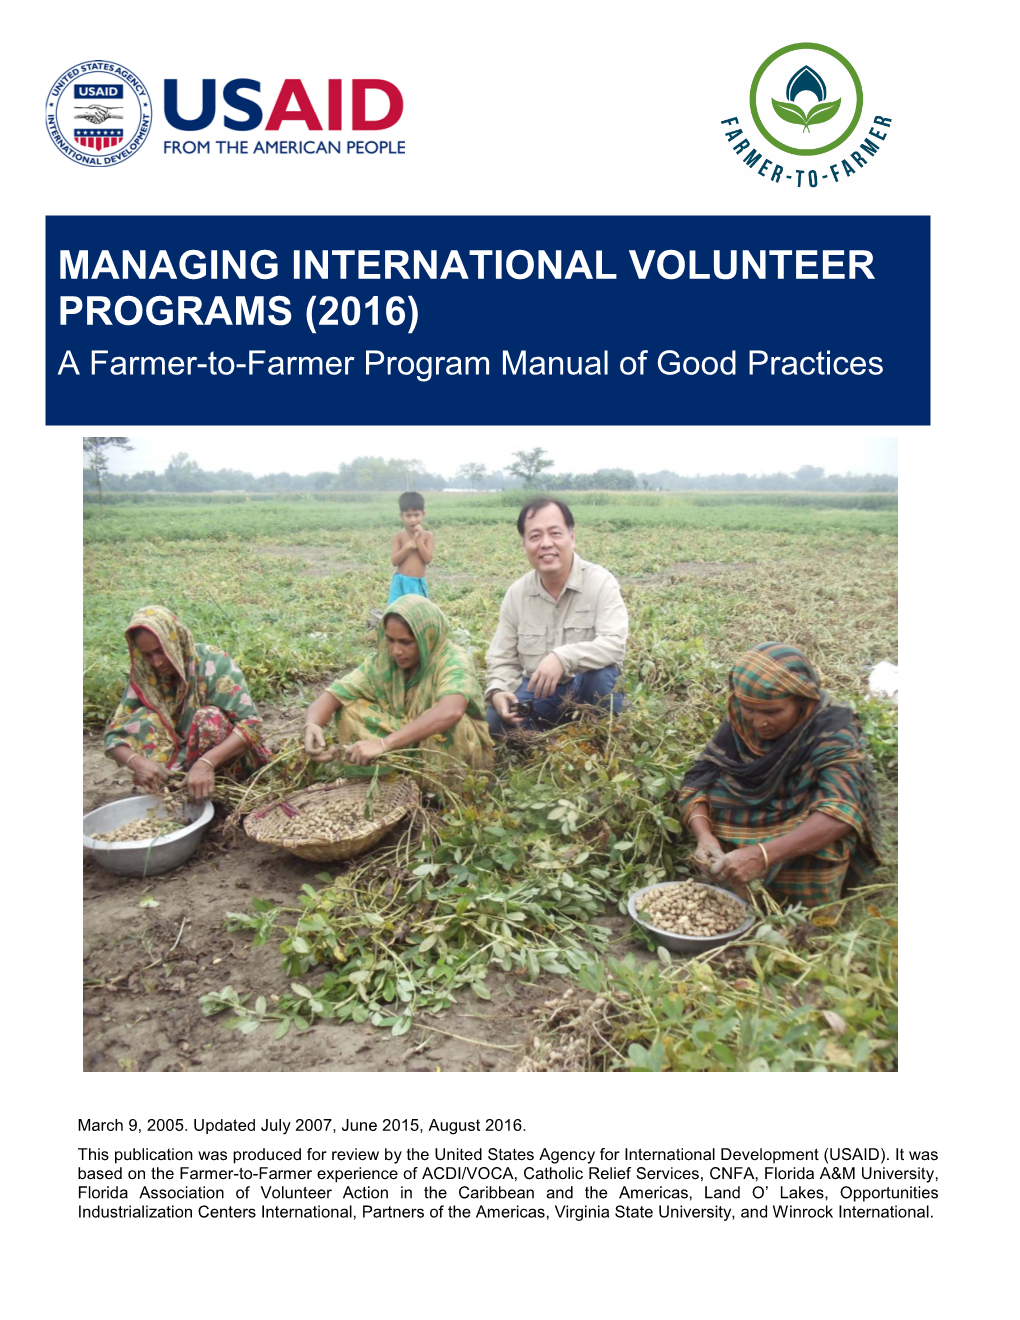 MANAGING INTERNATIONAL VOLUNTEER PROGRAMS (2016) a Farmer-To-Farmer Program Manual of Good Practices